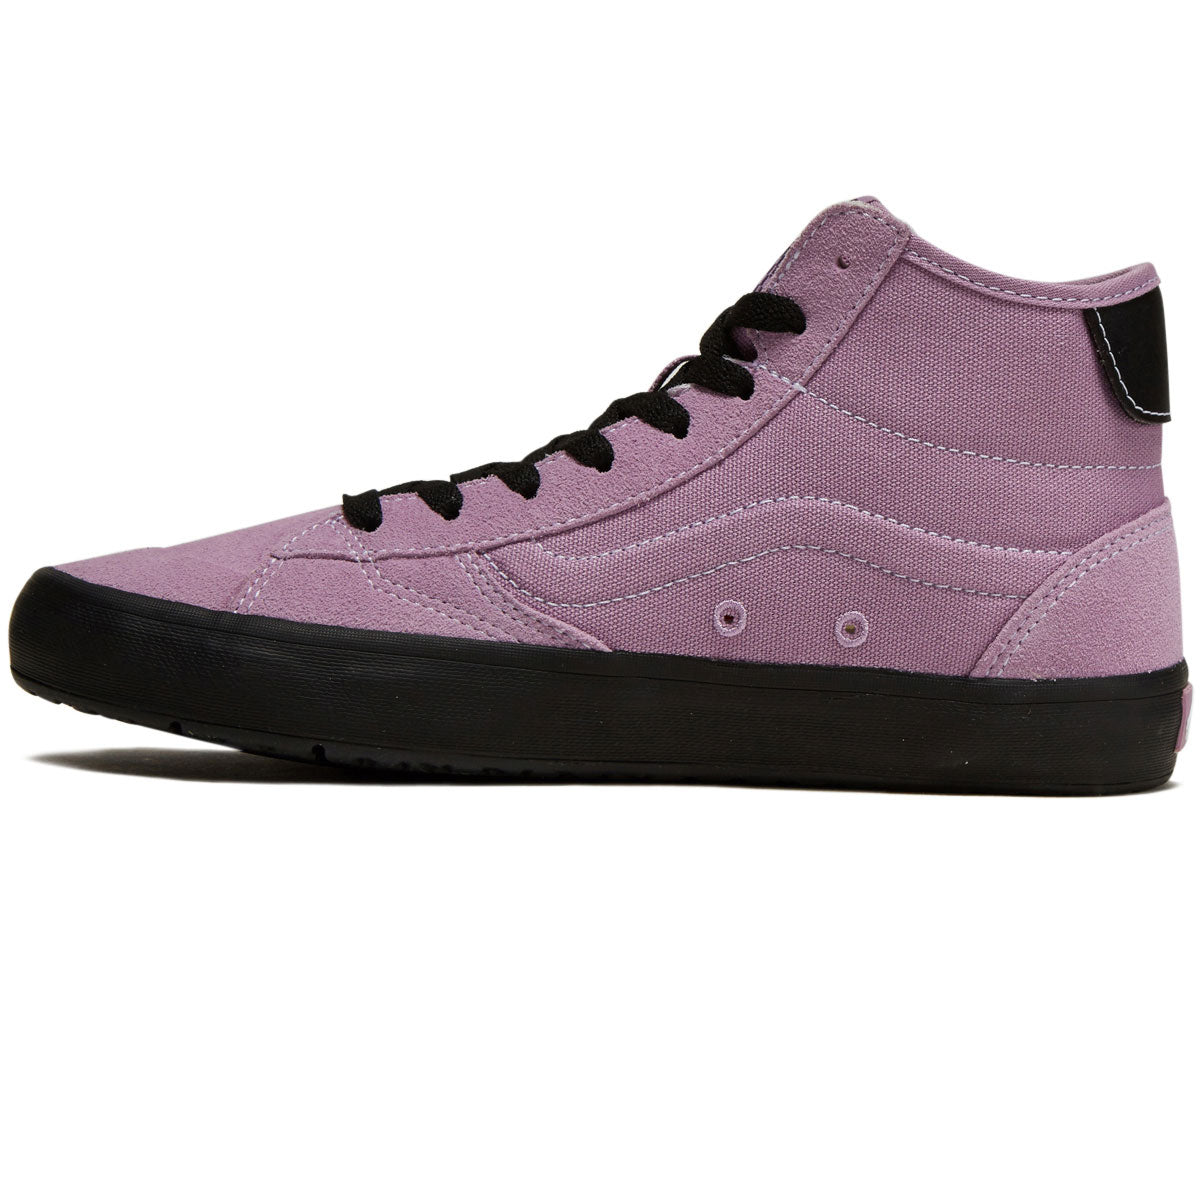 Vans The Lizzie Shoes - Lavender Fog/Black image 2